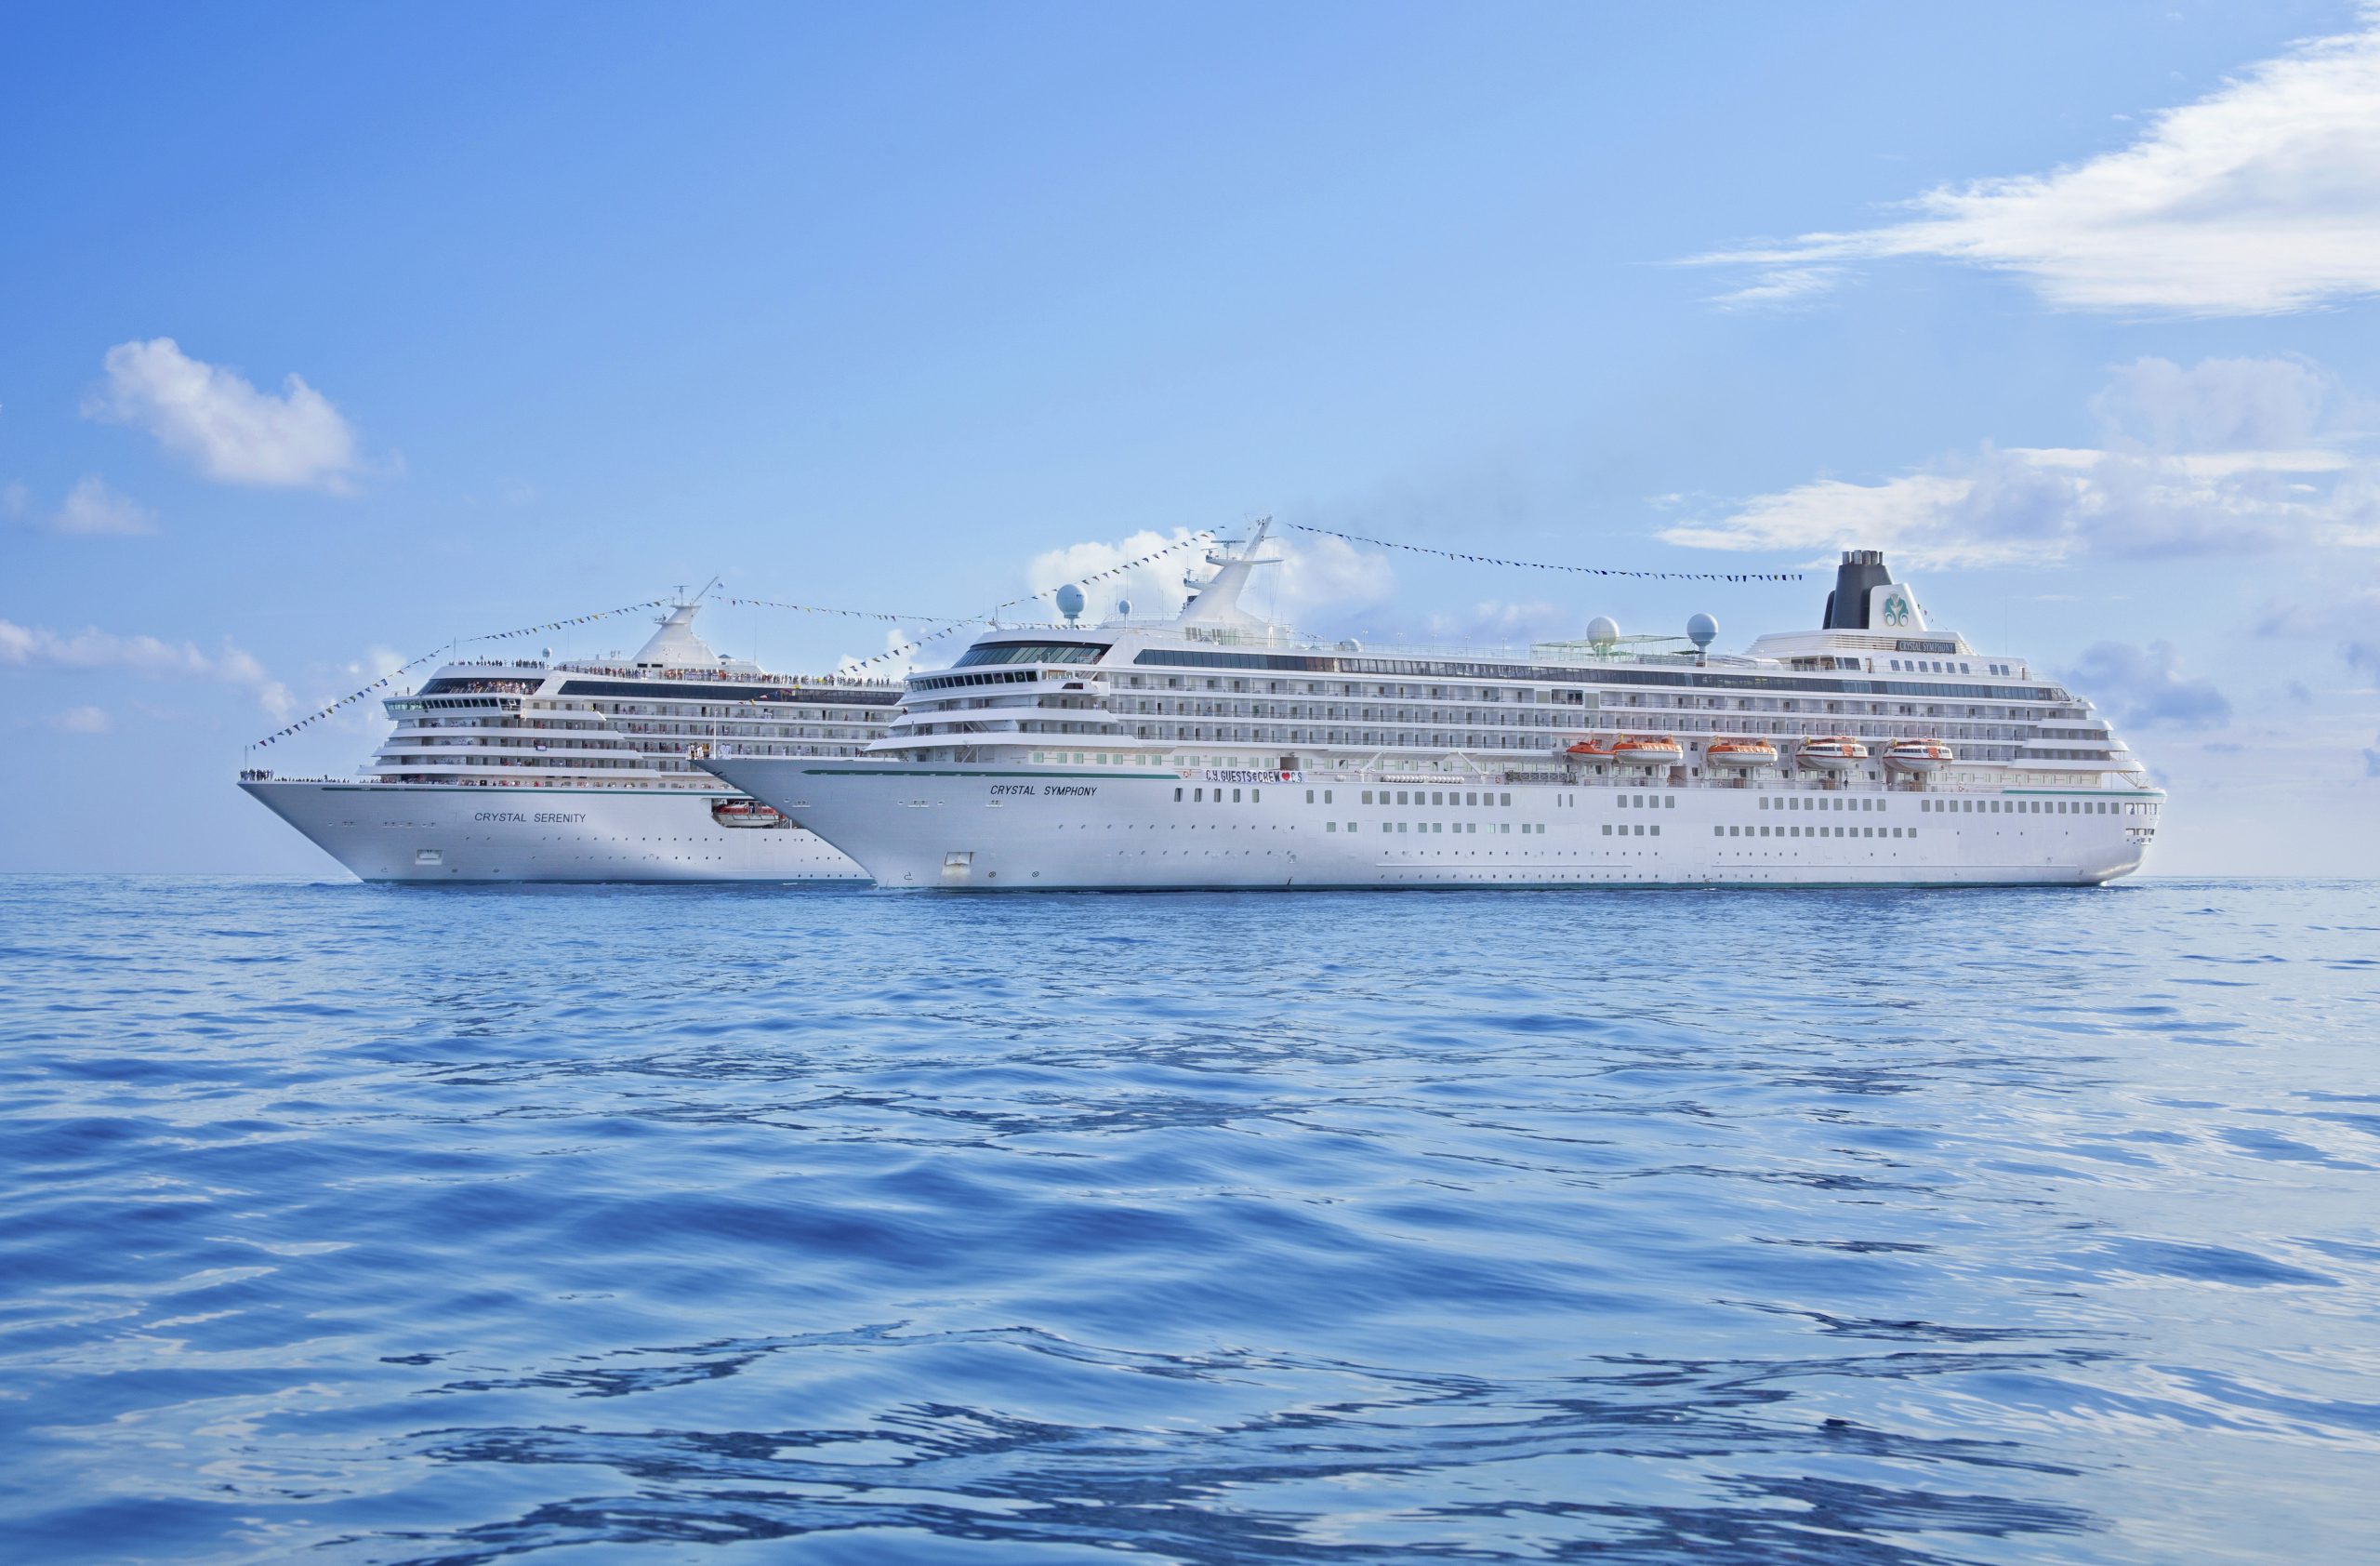 Ritz-Carlton yacht earmarked for Down Under - Cruise Passenger